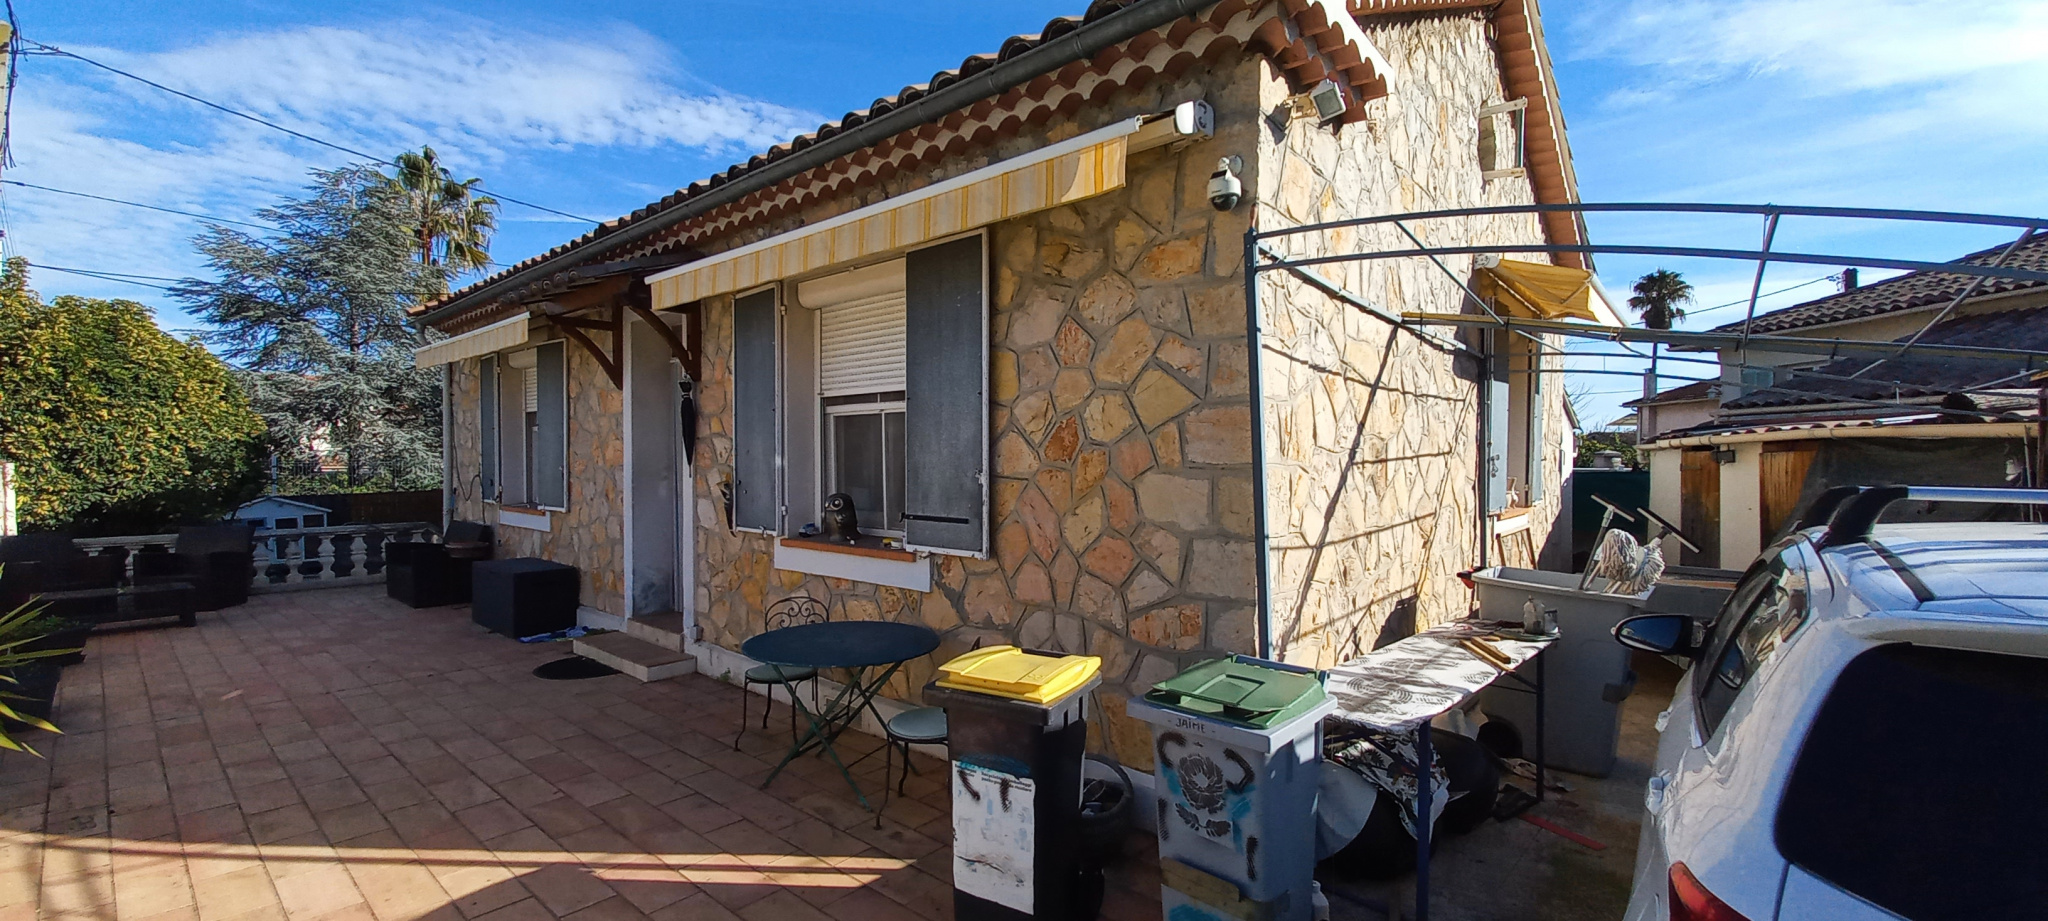 Vente Maison 80m² 3 Pièces à Antibes (06600) - Agence Avenir Immobilier International